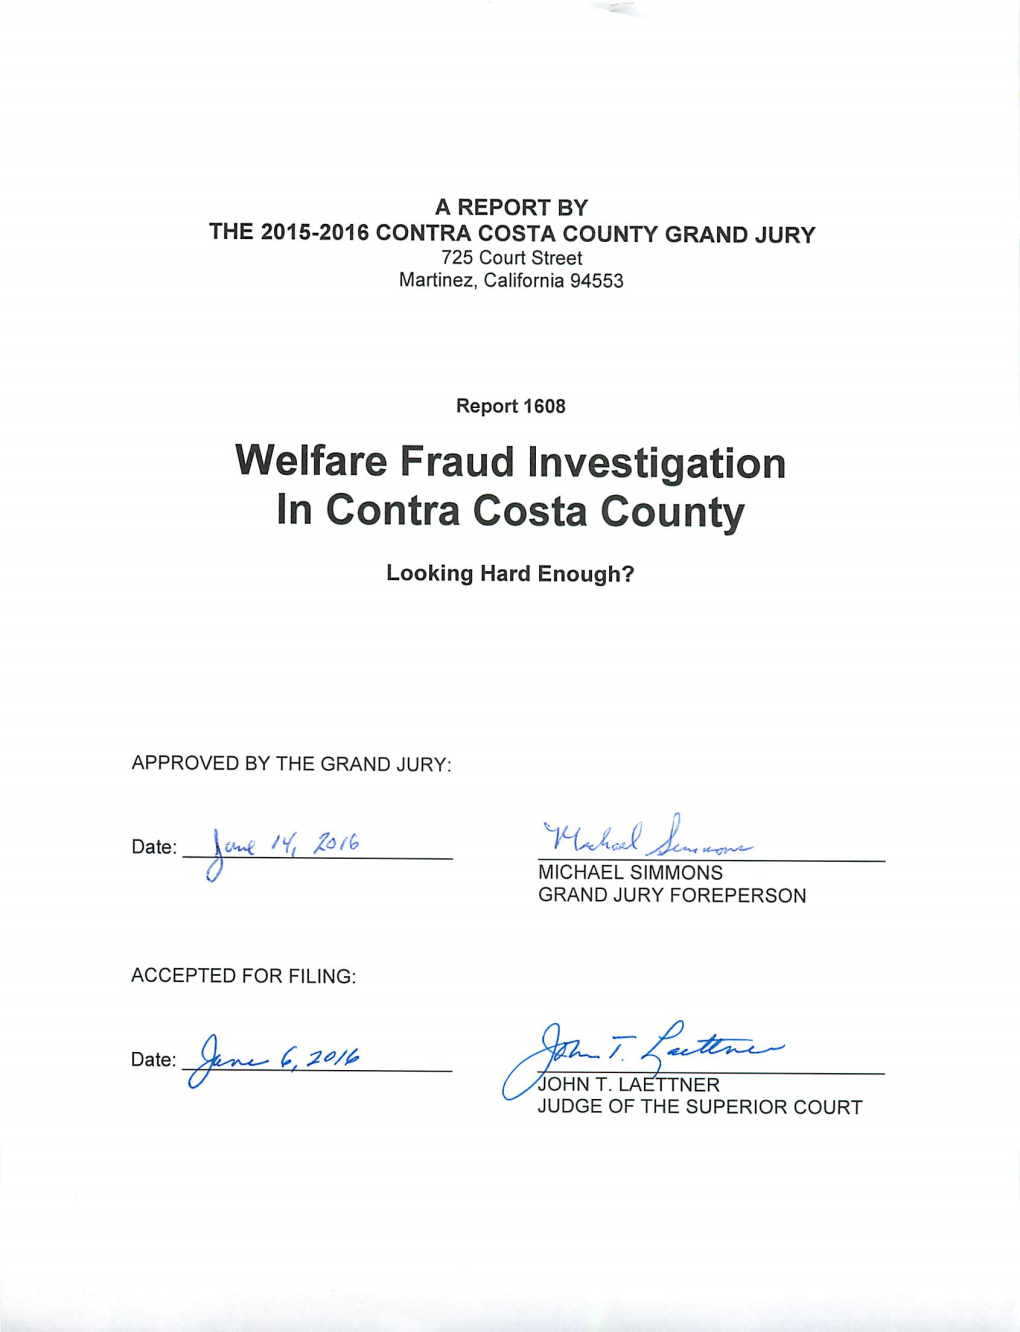 Welfare Fraud Investigation in Contra Costa County